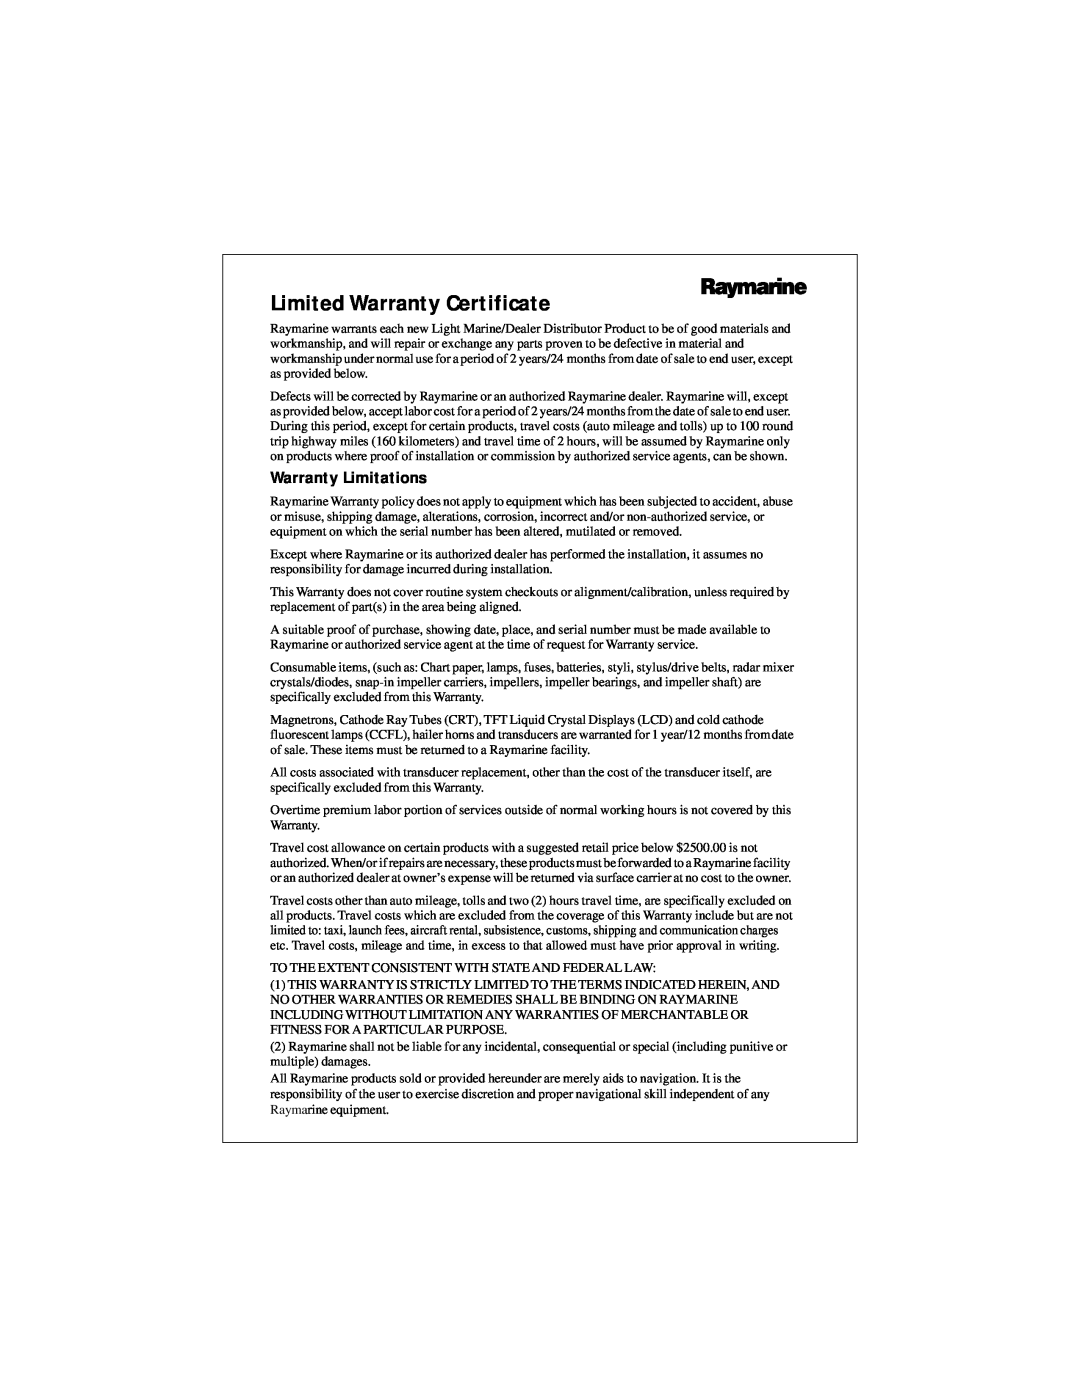 Raymarine L470 instruction manual Limited Warranty Certificate, Warranty Limitations 